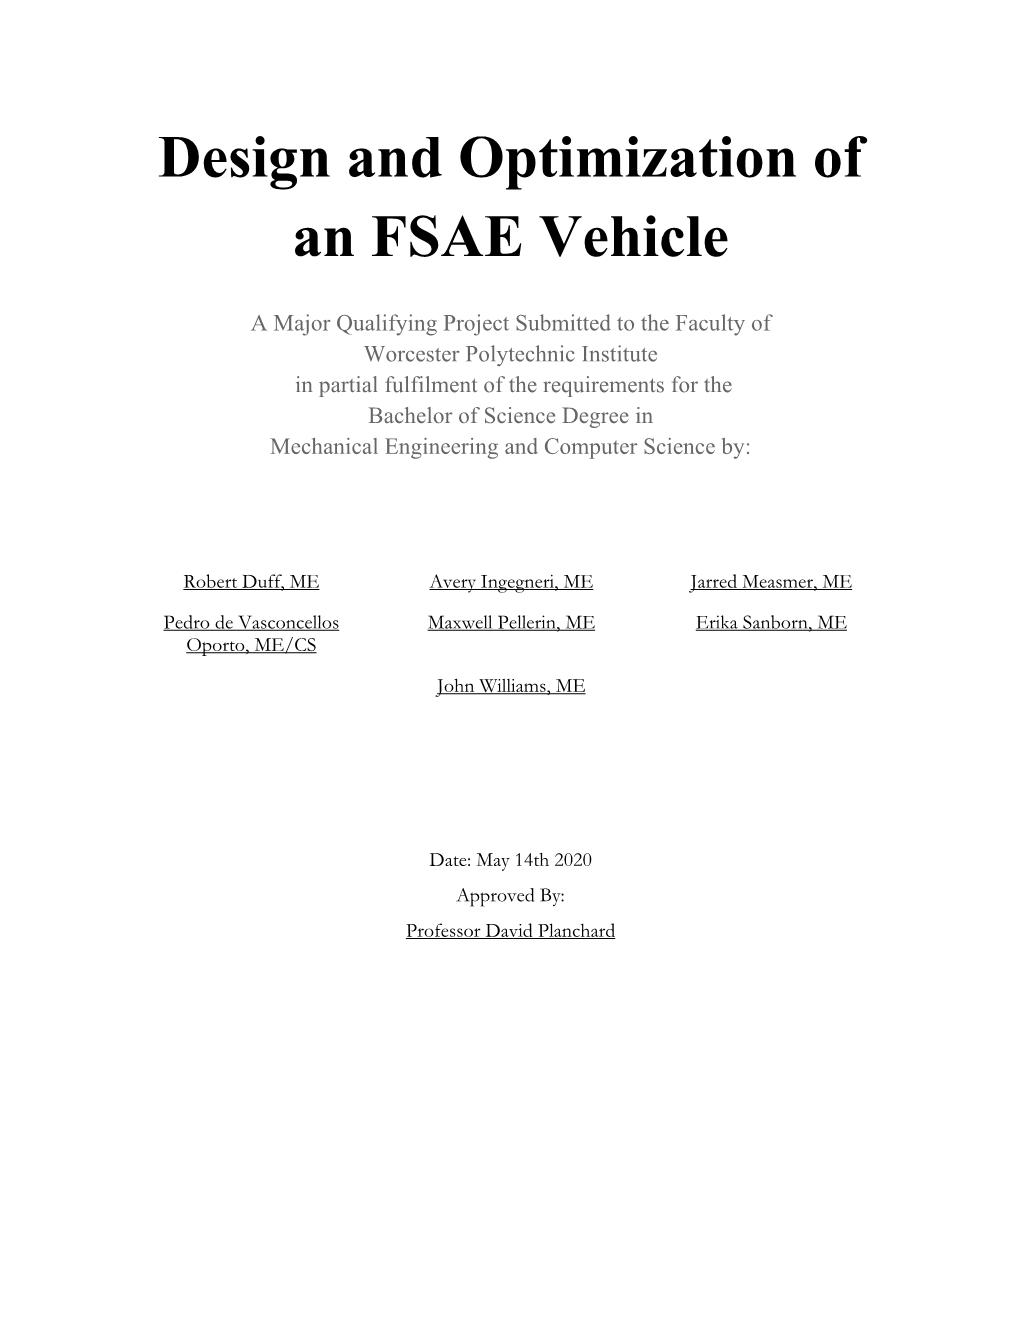 Design and Optimization of an FSAE Vehicle